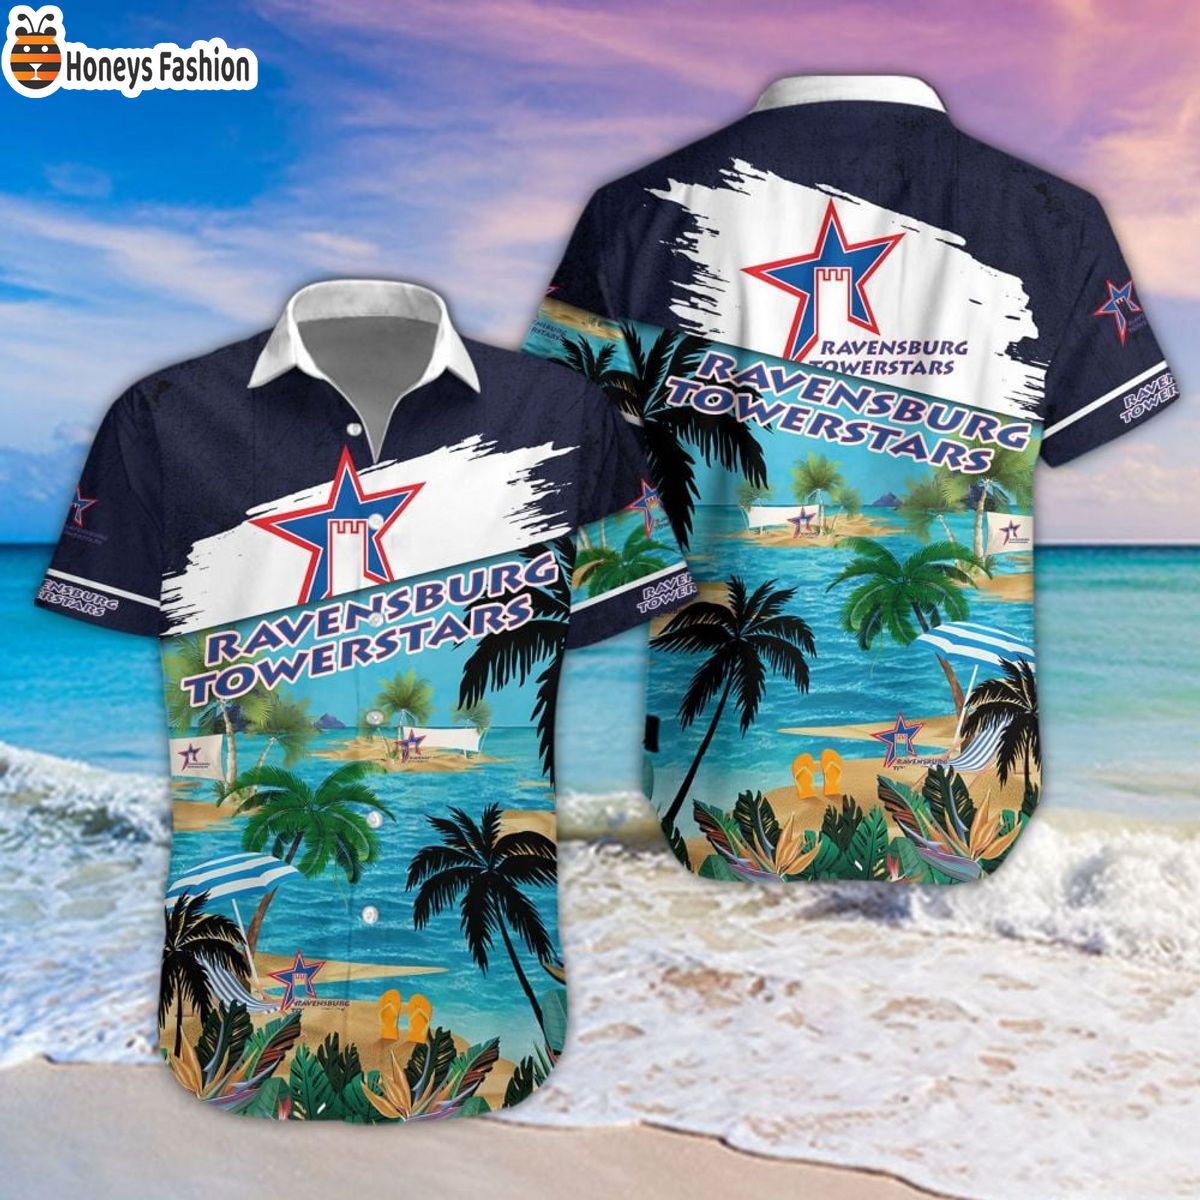 Ravensburg Towerstars 2023 Hawaiian Shirt